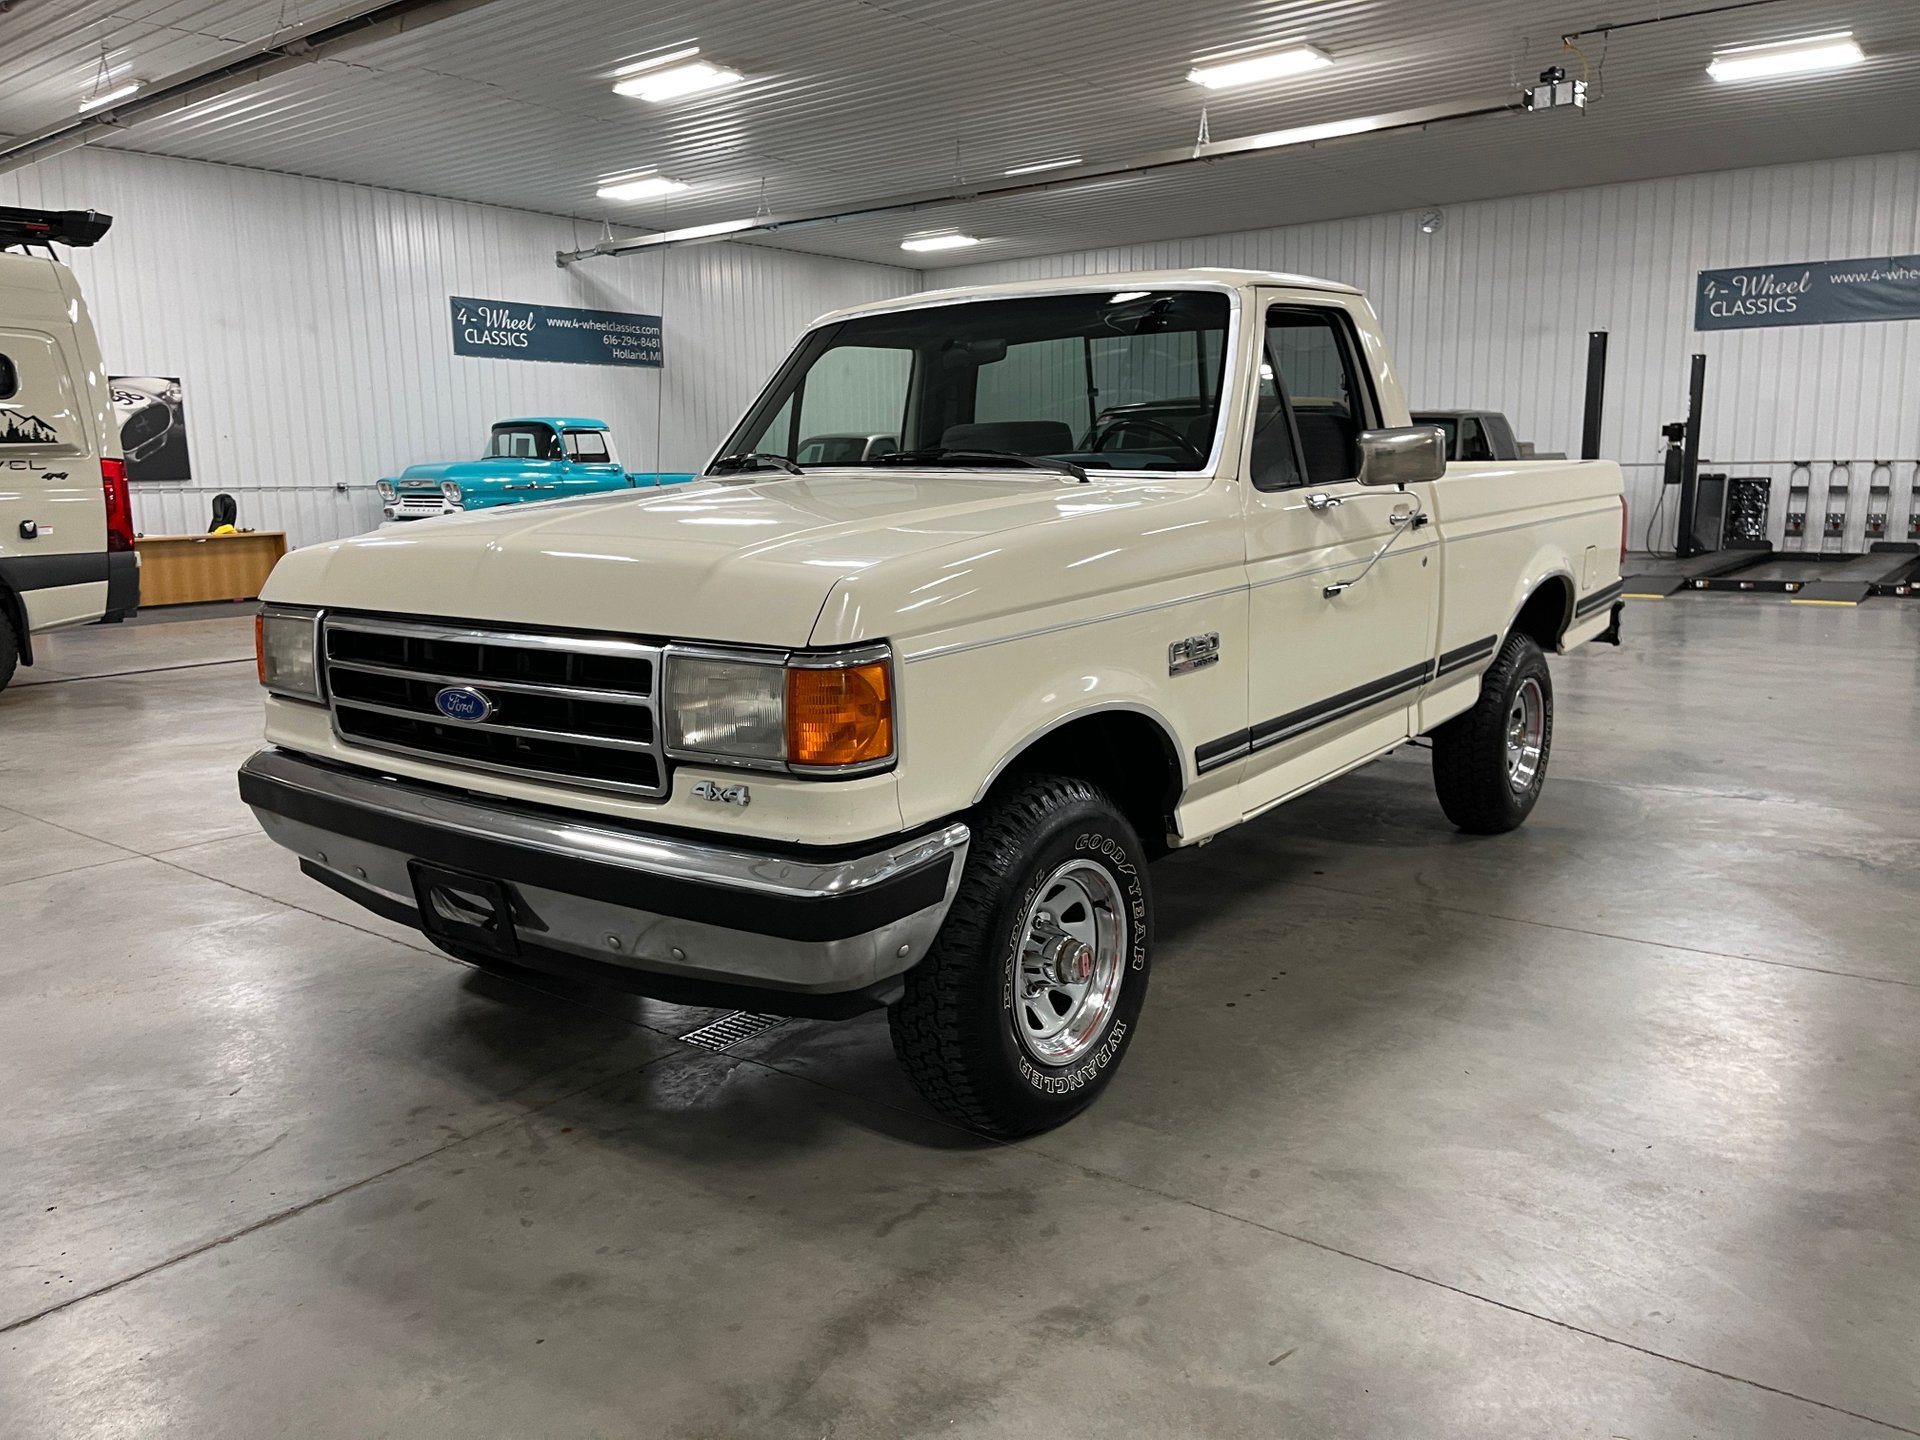 1989 Ford F150 | 4-Wheel Classics/Classic Car, Truck, and SUV Sales